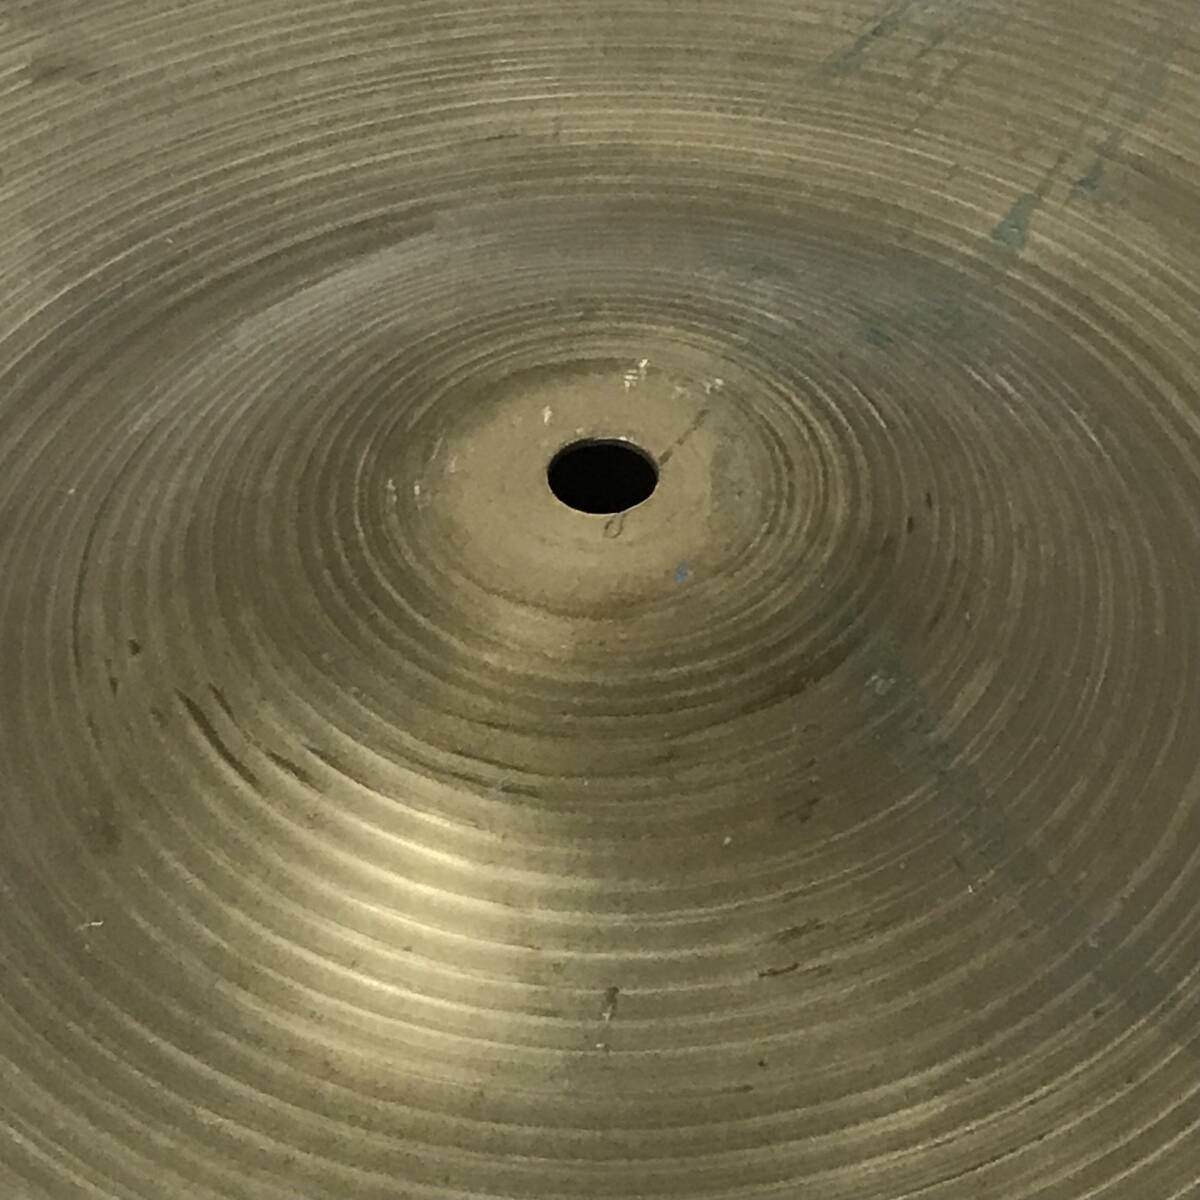 BF14/16 Zildjian Jill Jean AVEDIS тарелки 56cm текущее состояние товар музыкальные инструменты б/у товар 